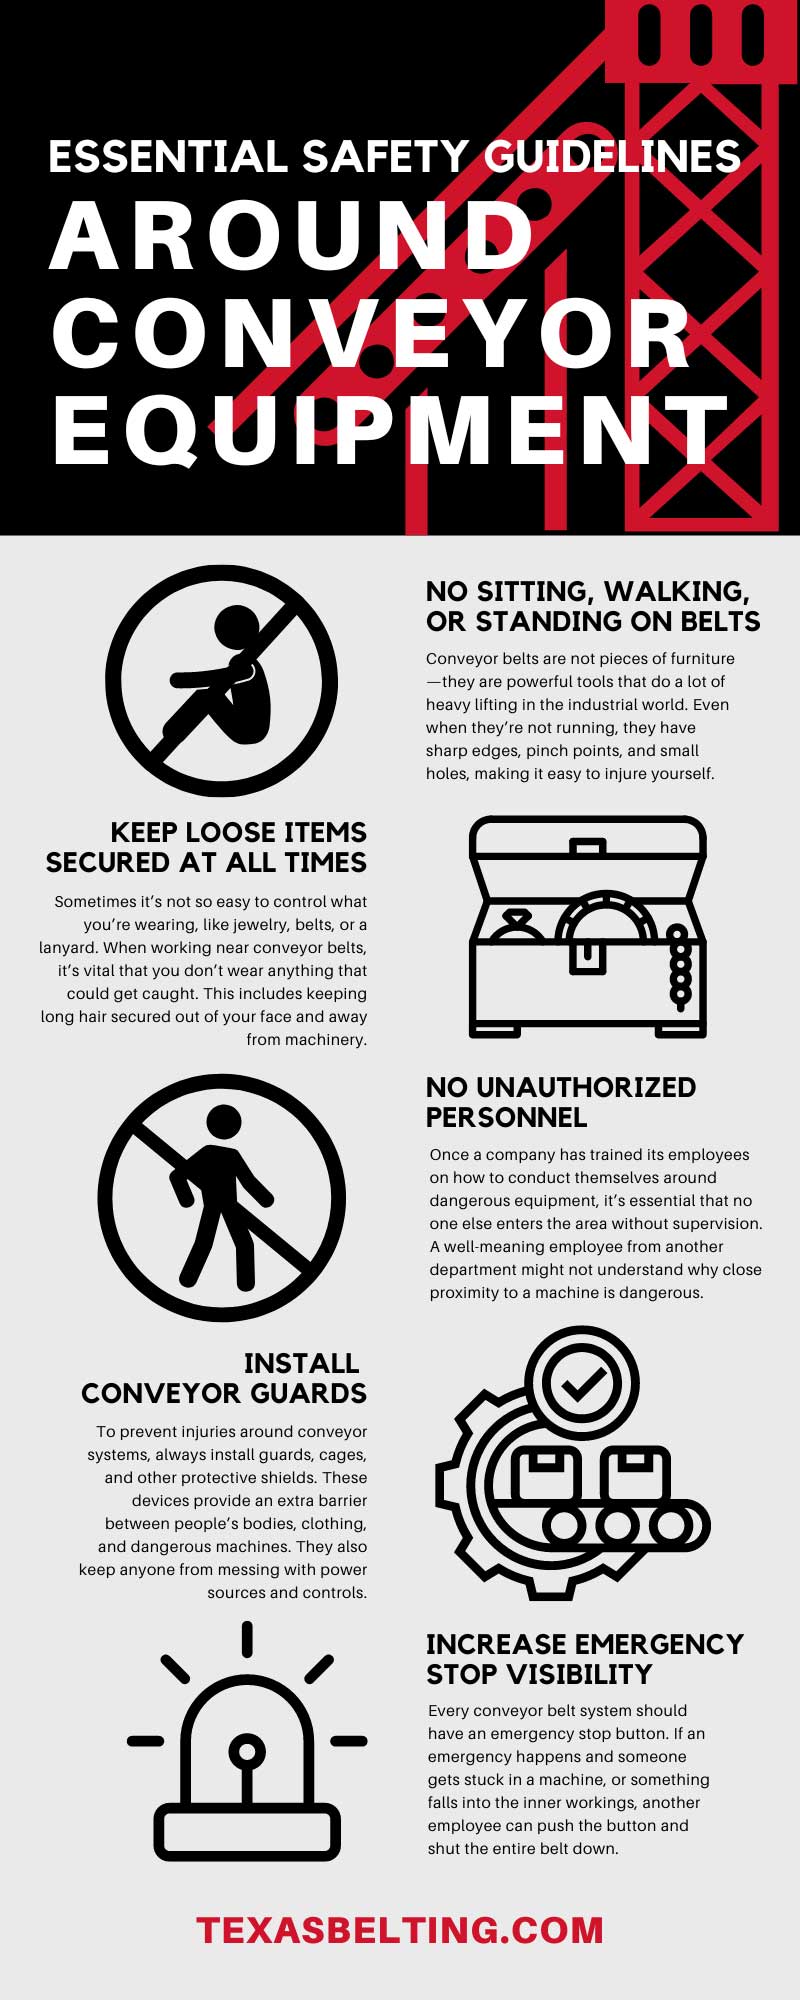 Essential Safety Guidelines Around Conveyor Equipment